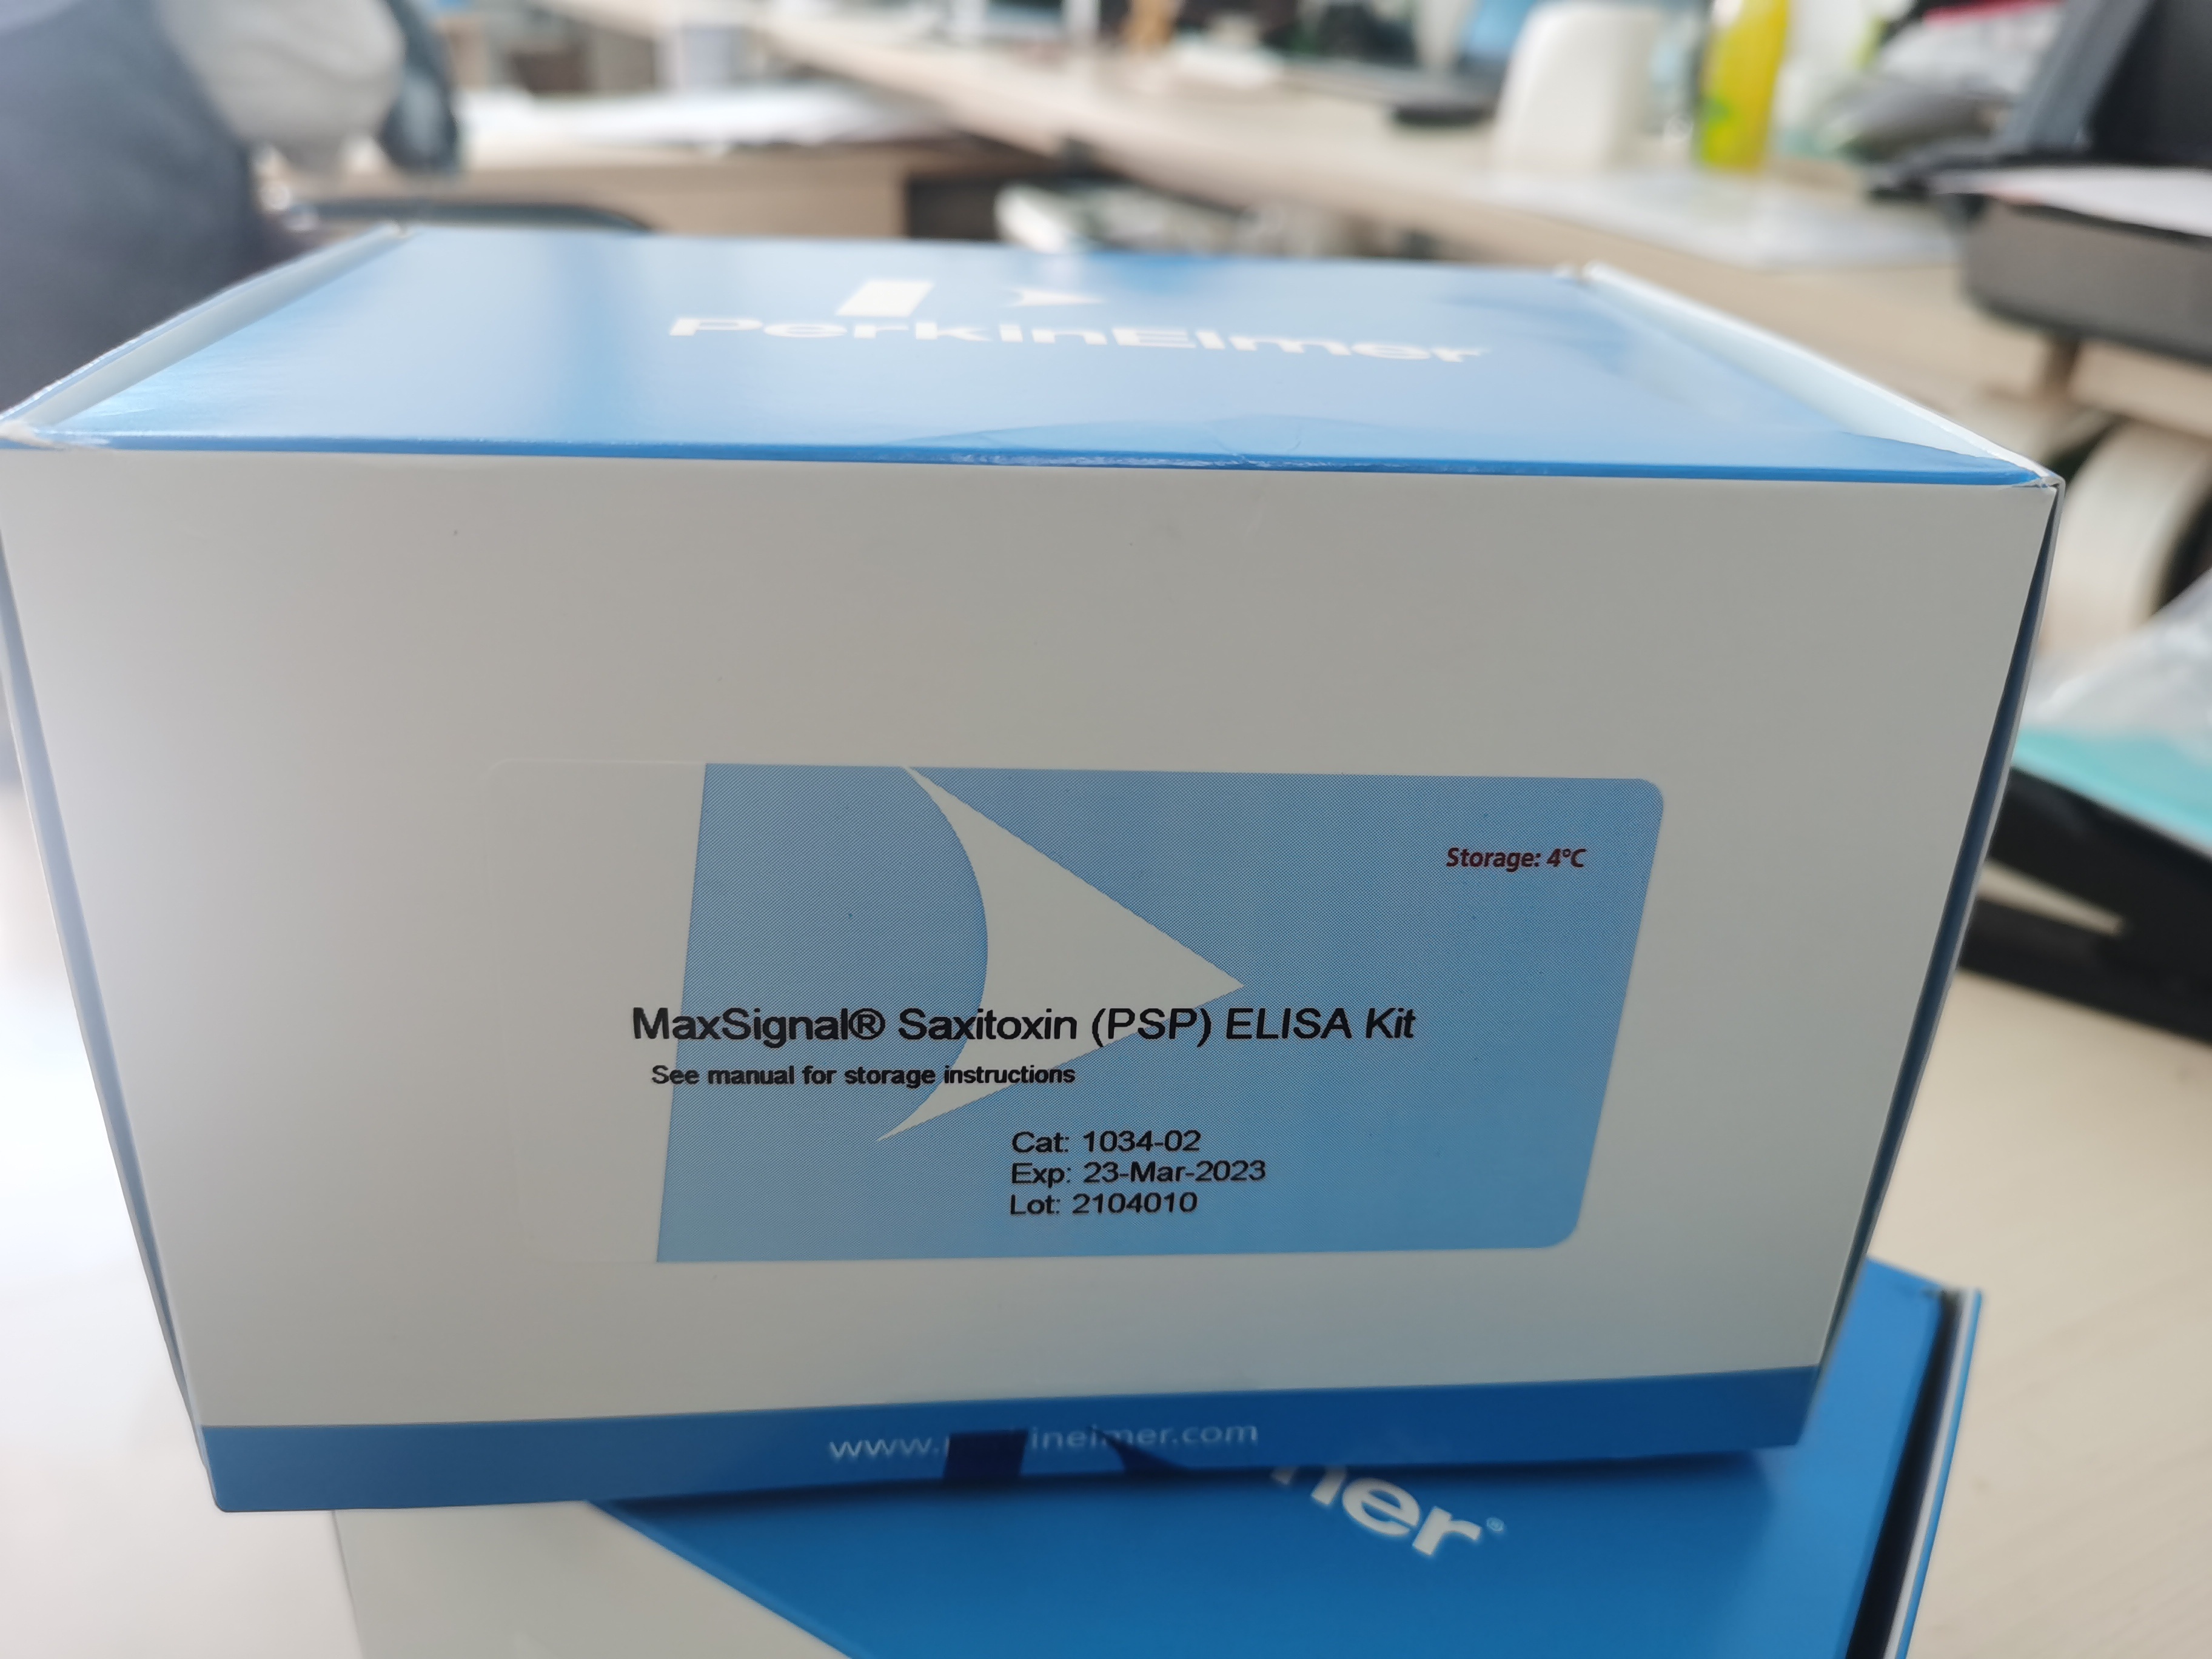 clover-1034-02麻痹性贝类毒素(PSP)检测试剂盒